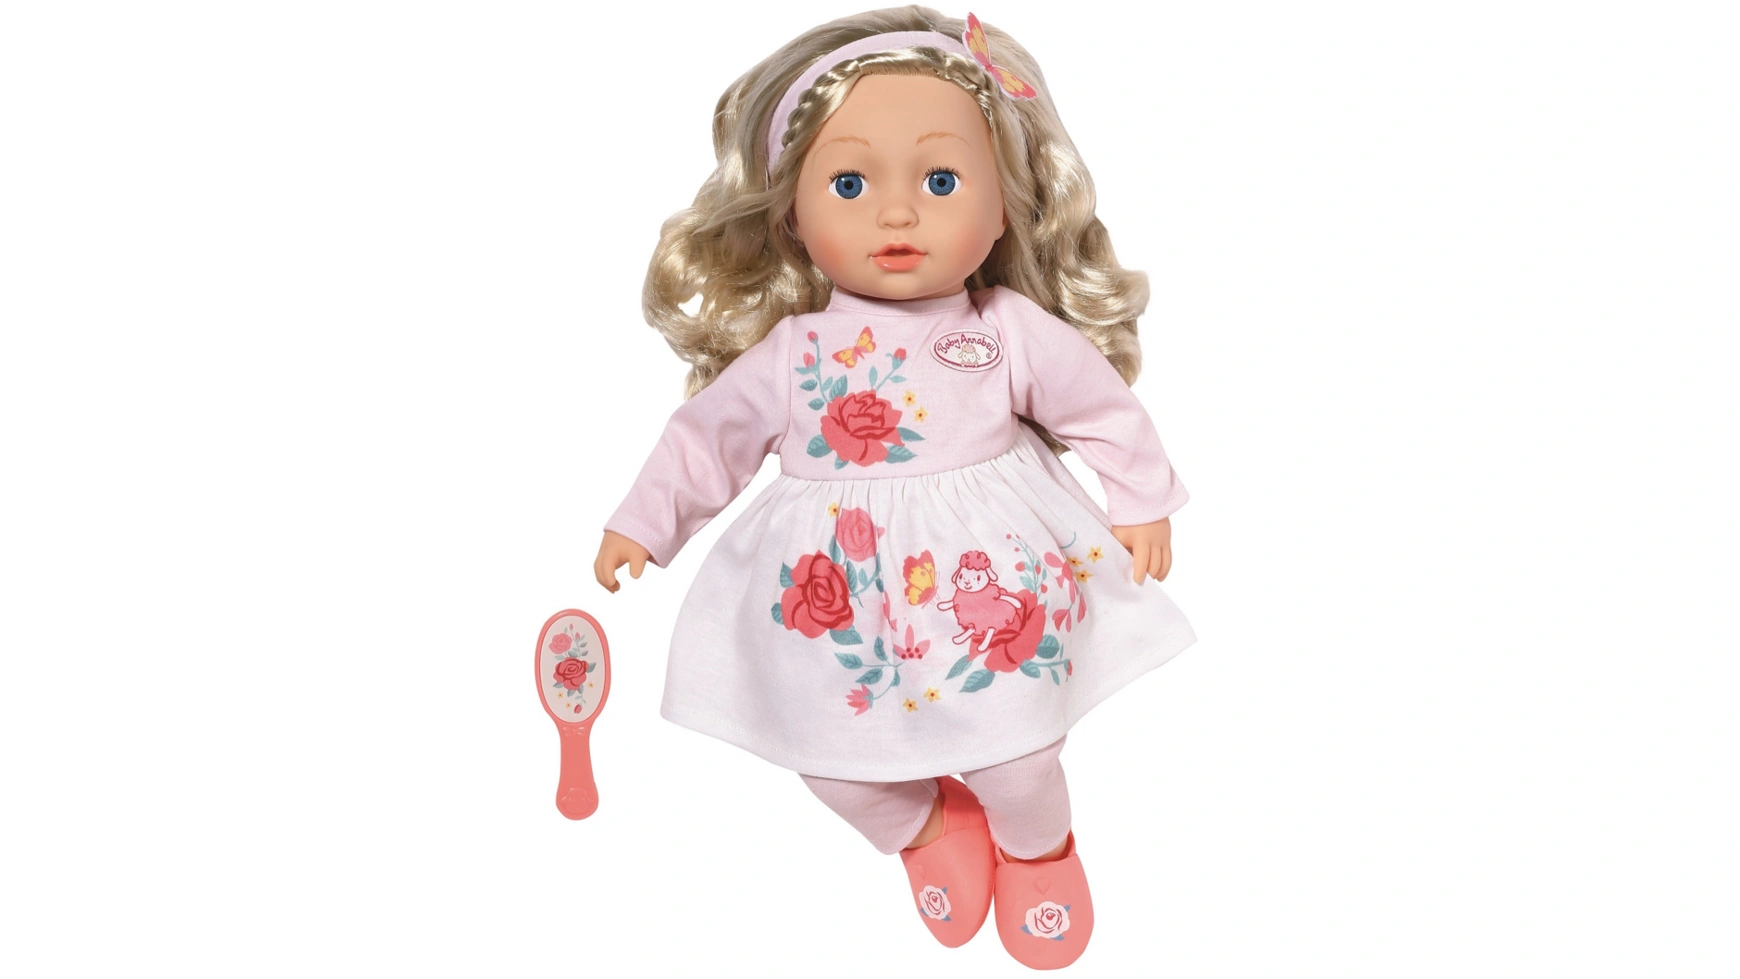 Zapf Creation Baby Annabell Sophia 43см, Игровая кукла с приятным мягким тельцем